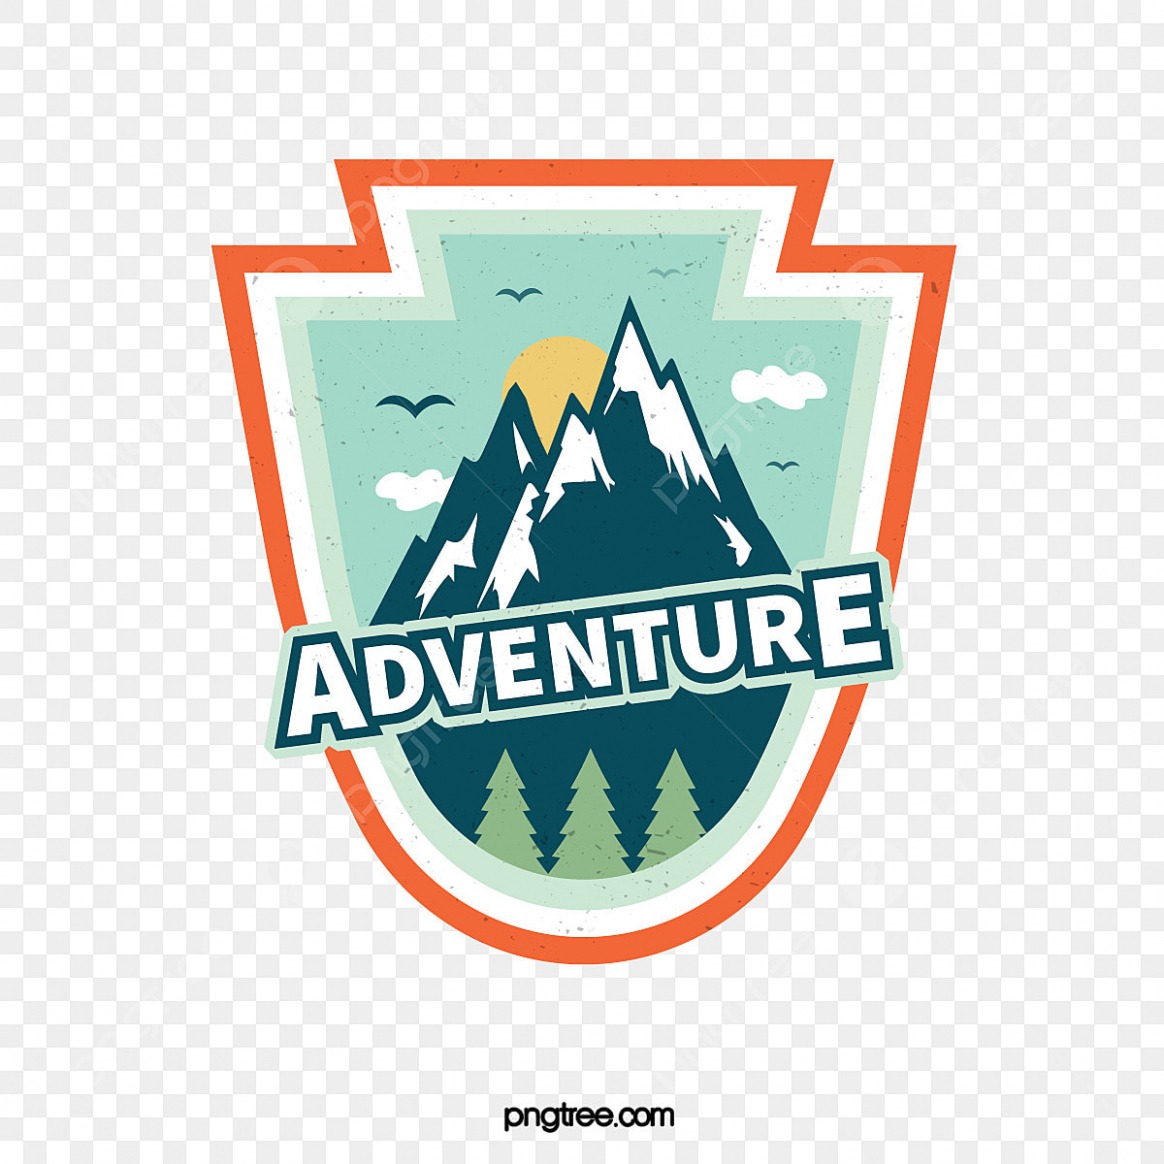 free editable outdoor adventure logo vector design images retro style outdoor adventure logo free logo design word sample